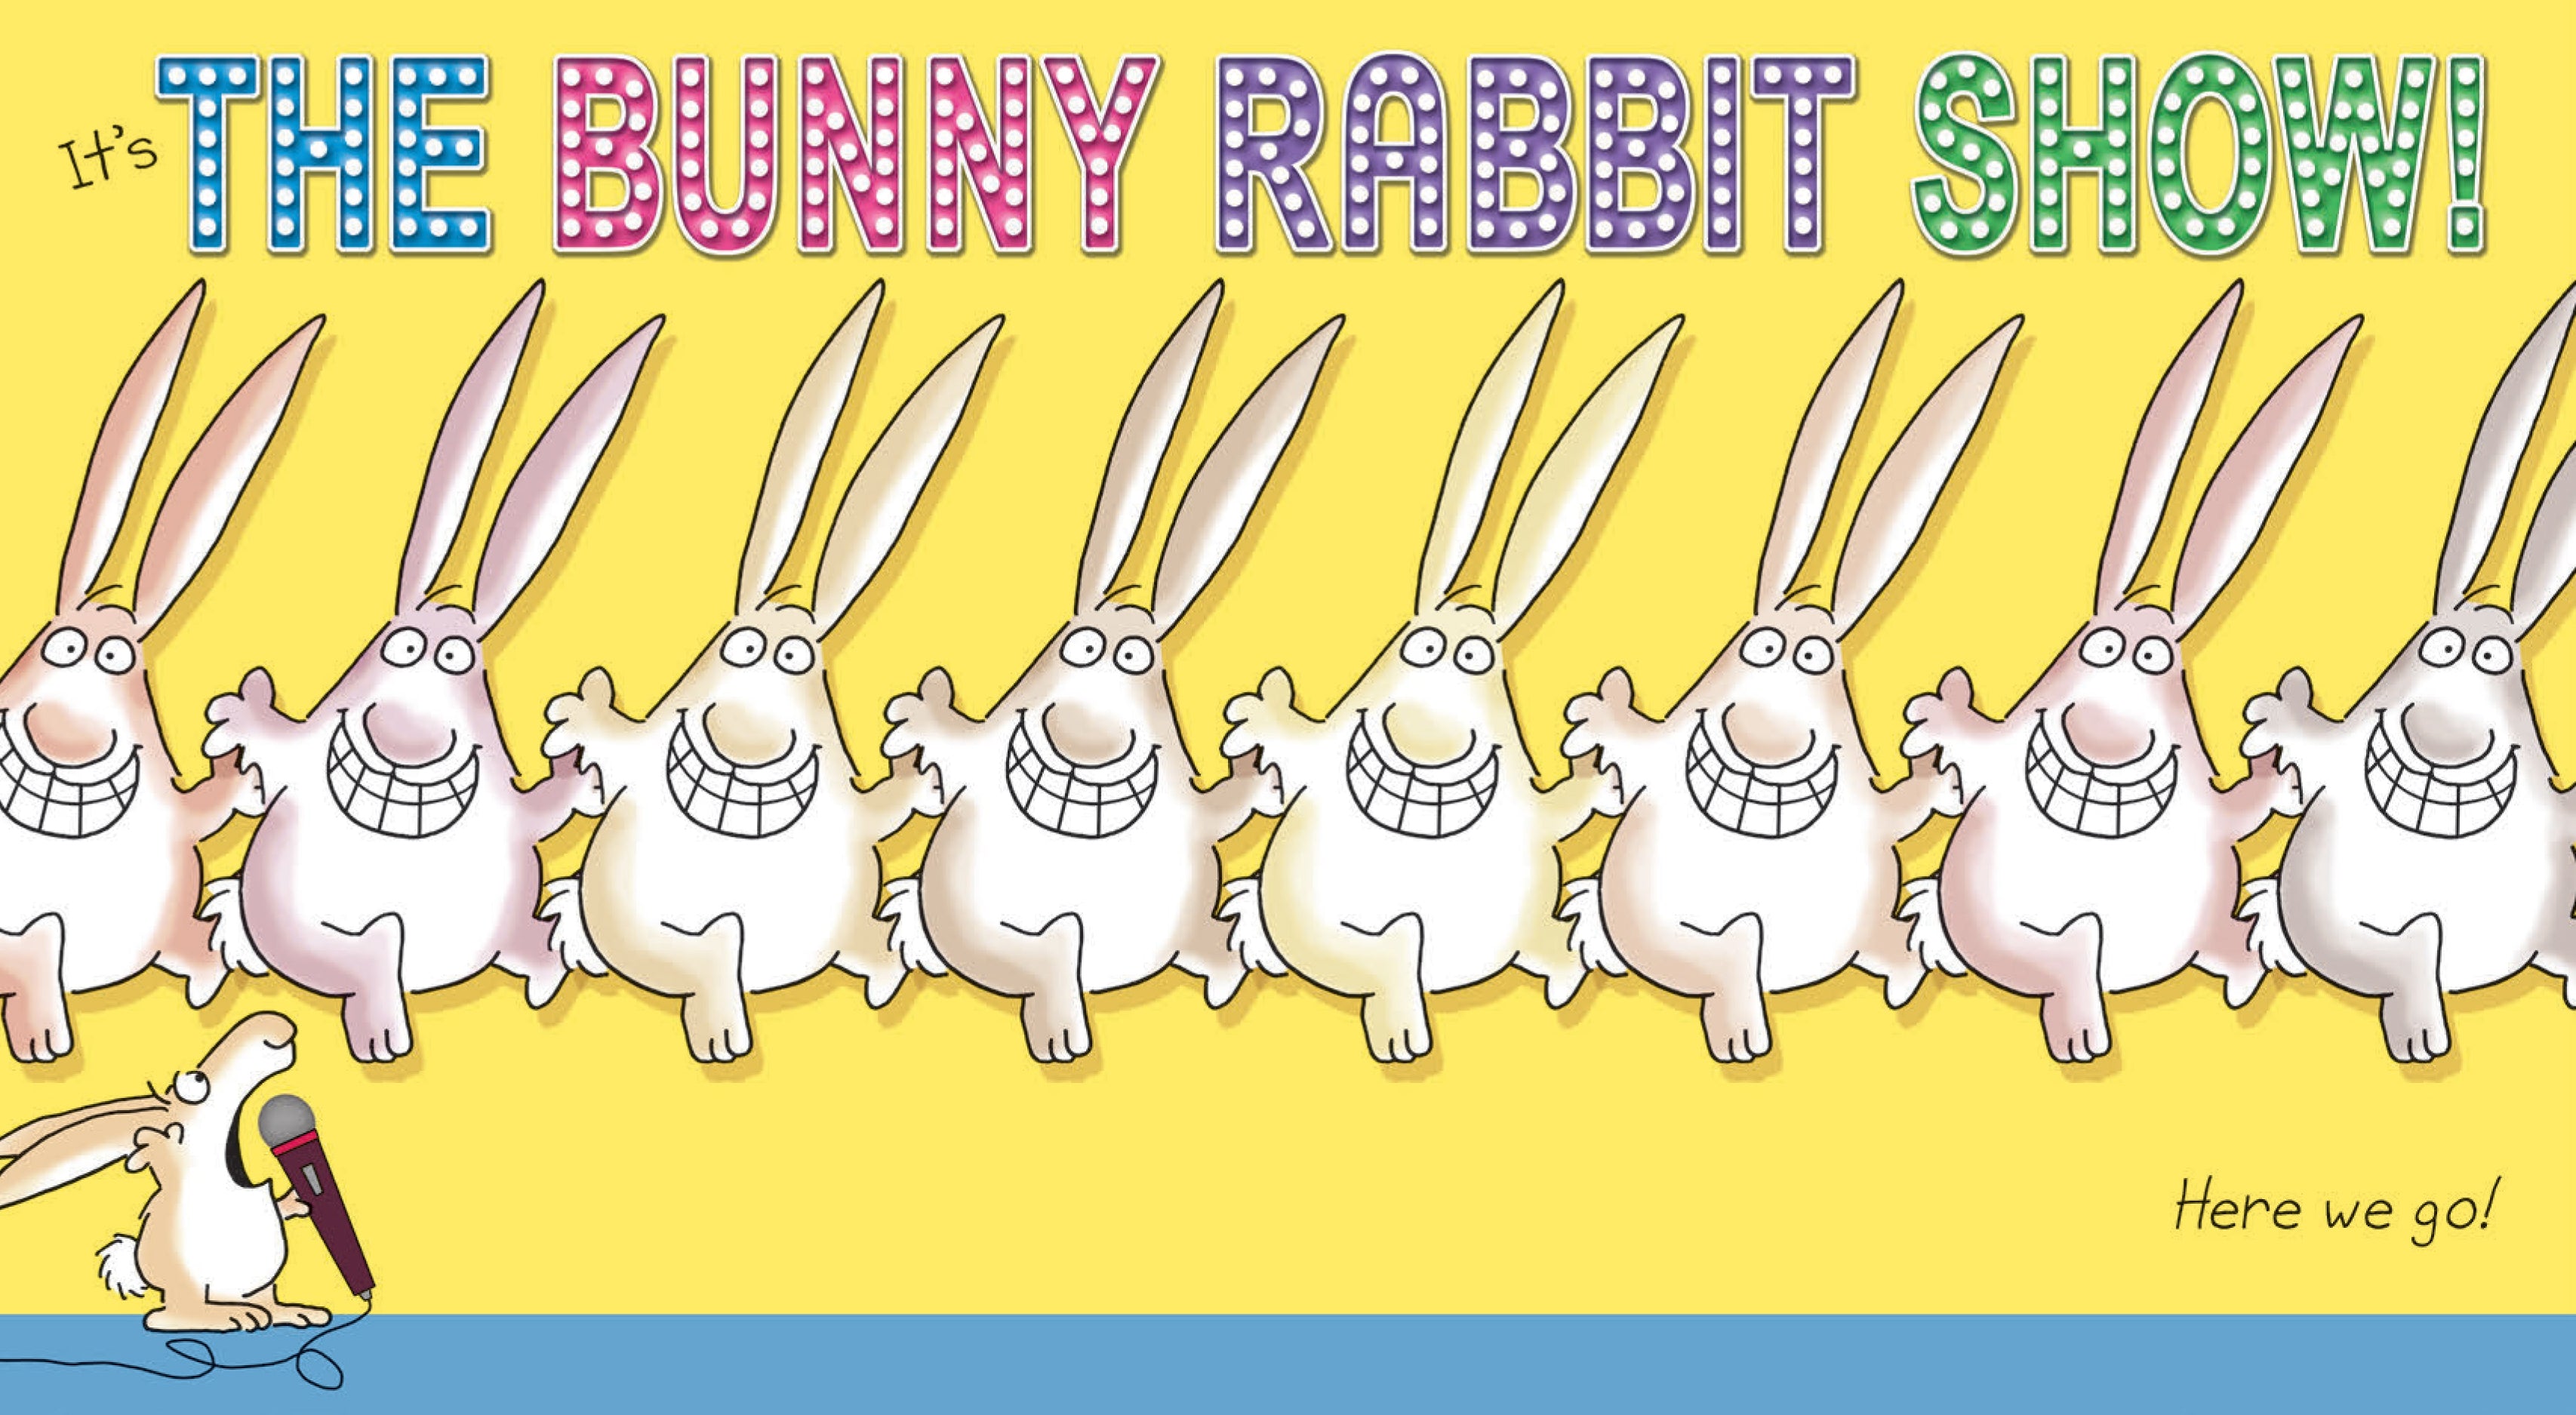 The Bunny Rabbit Show!    